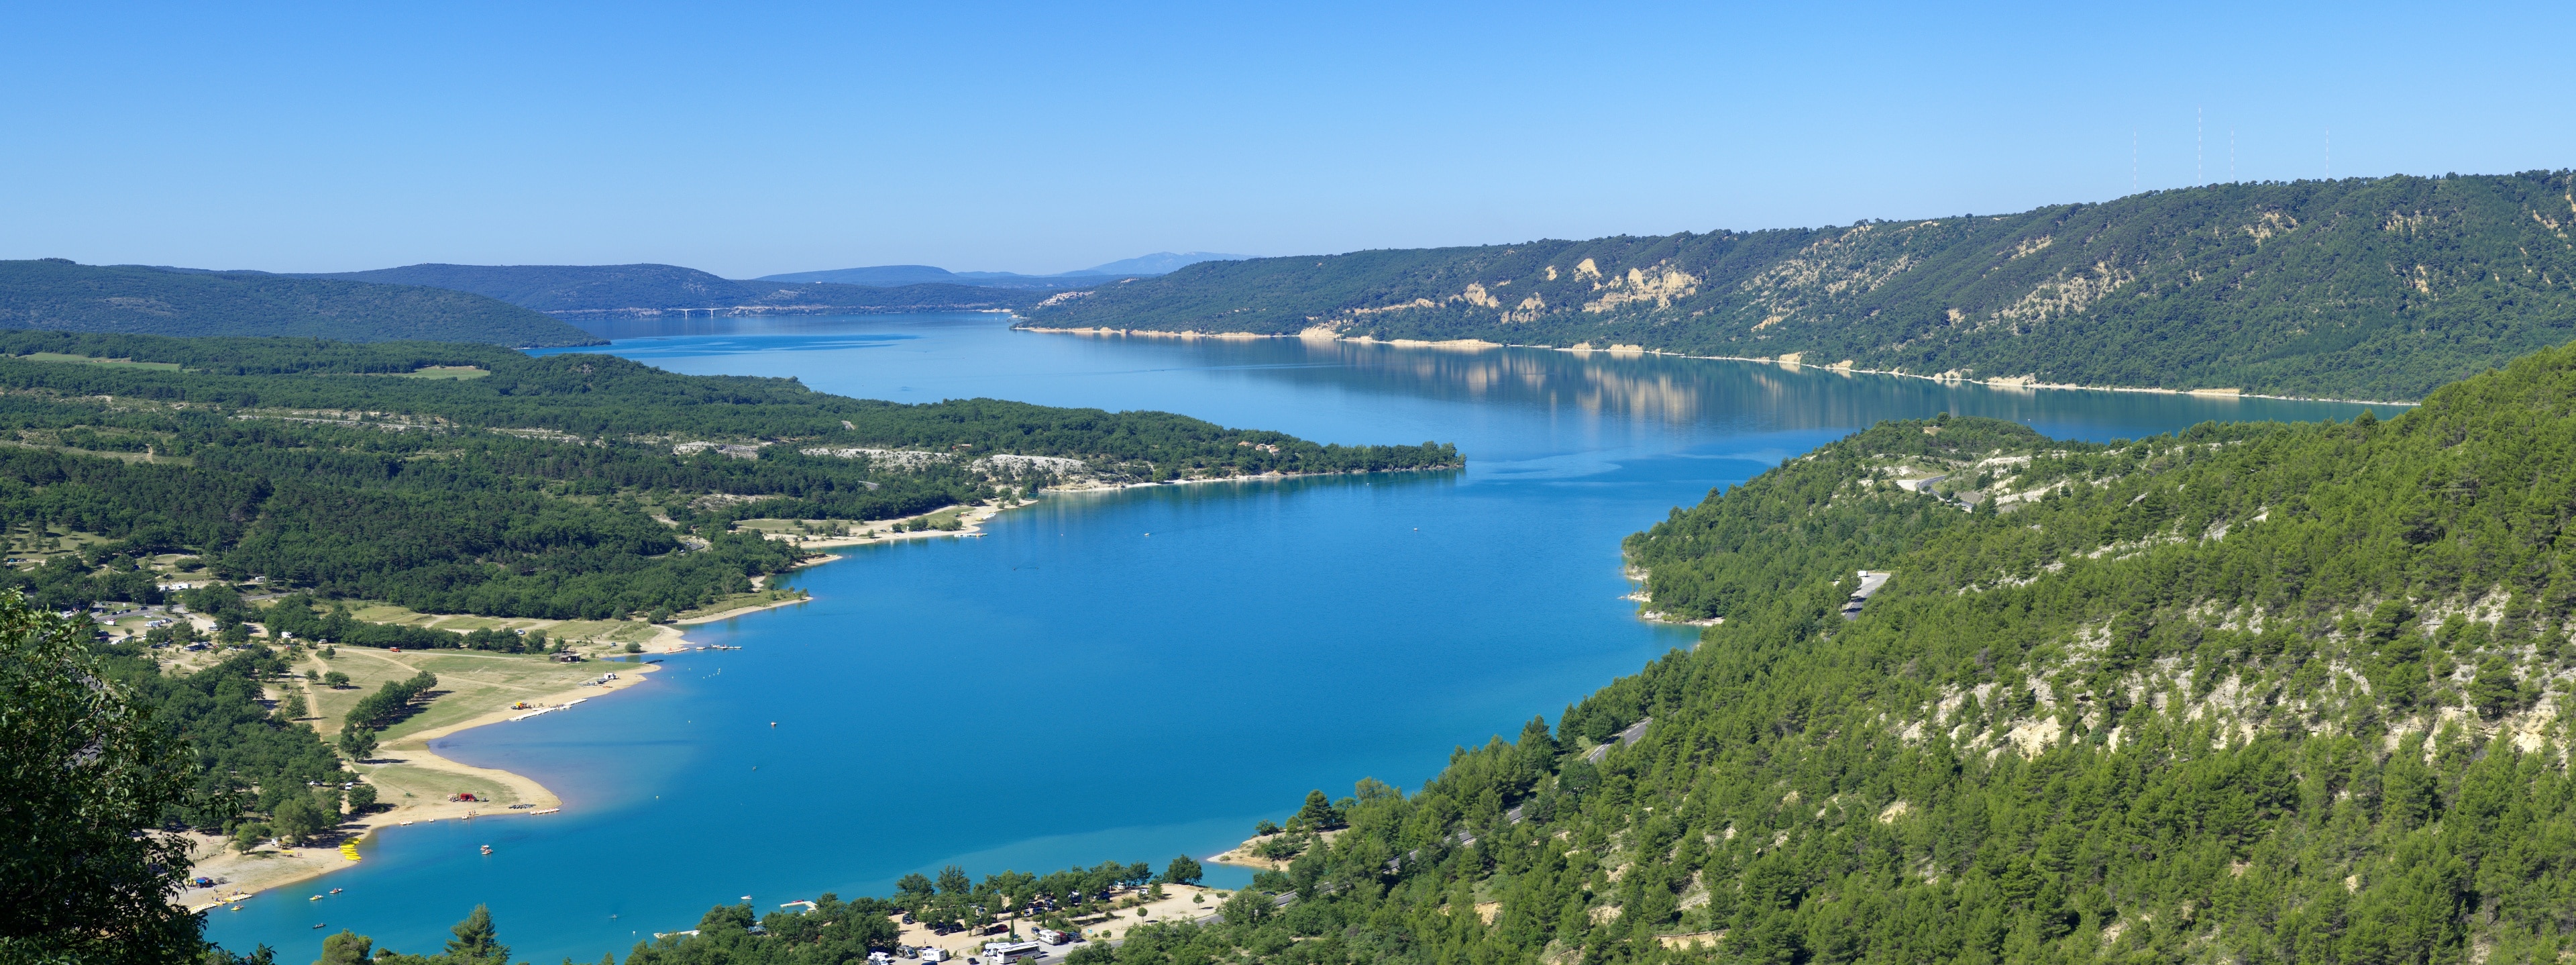 Lac de Sainte Croix (järvi), Ranska